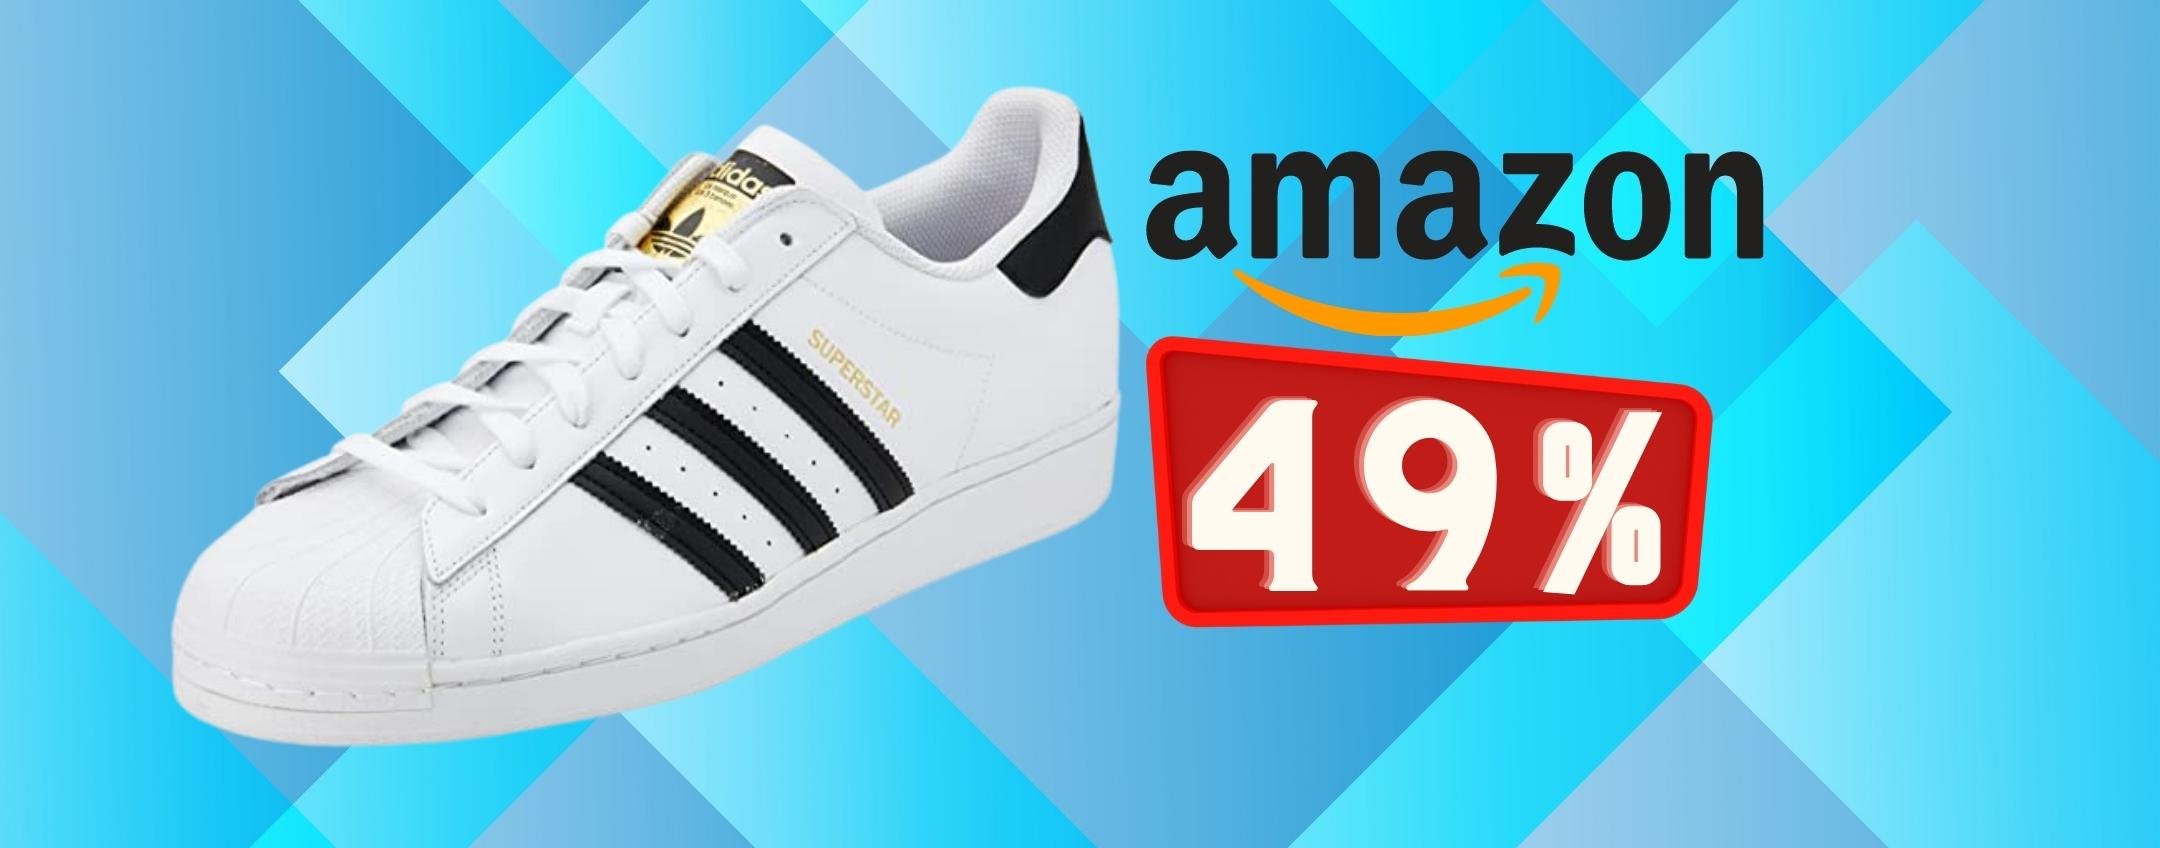 Adidas superstar: le mitiche sneakers sono in SCONTO su Amazon al 49%